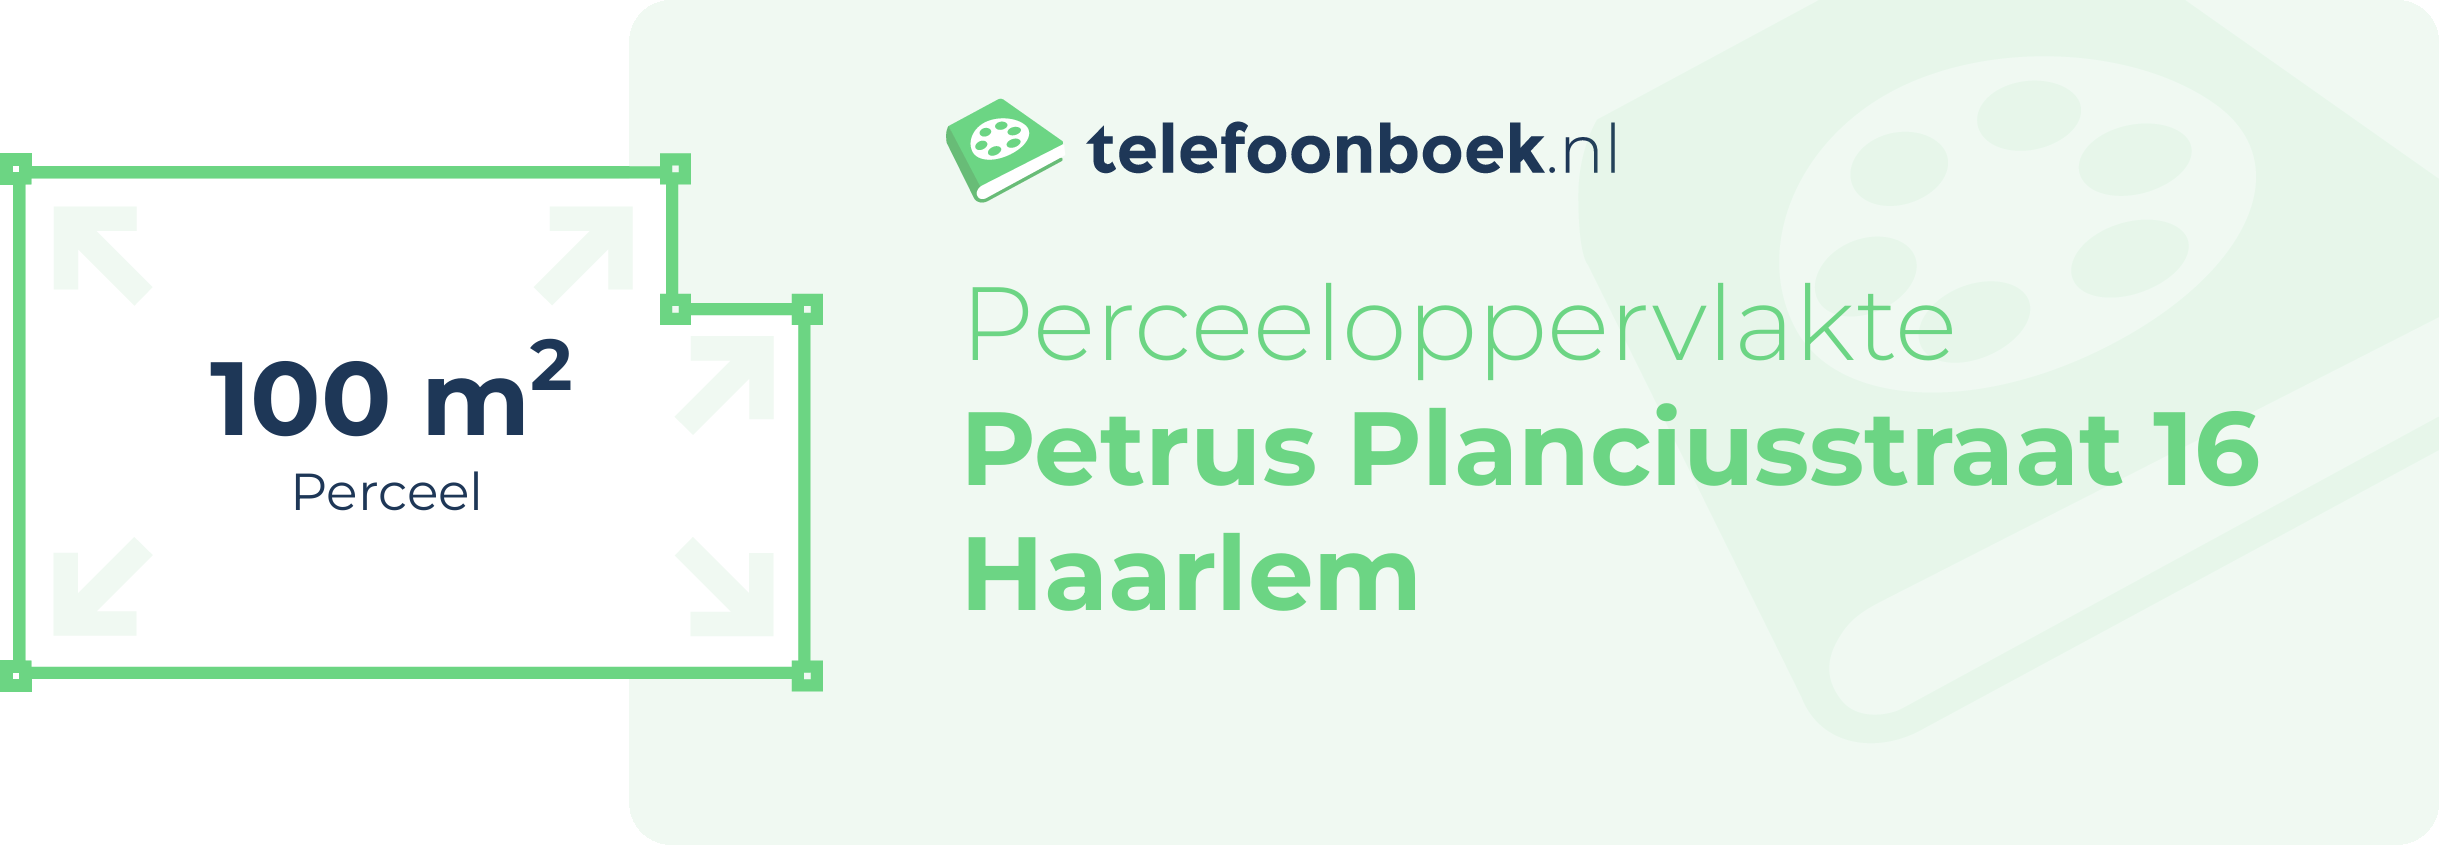 Perceeloppervlakte Petrus Planciusstraat 16 Haarlem